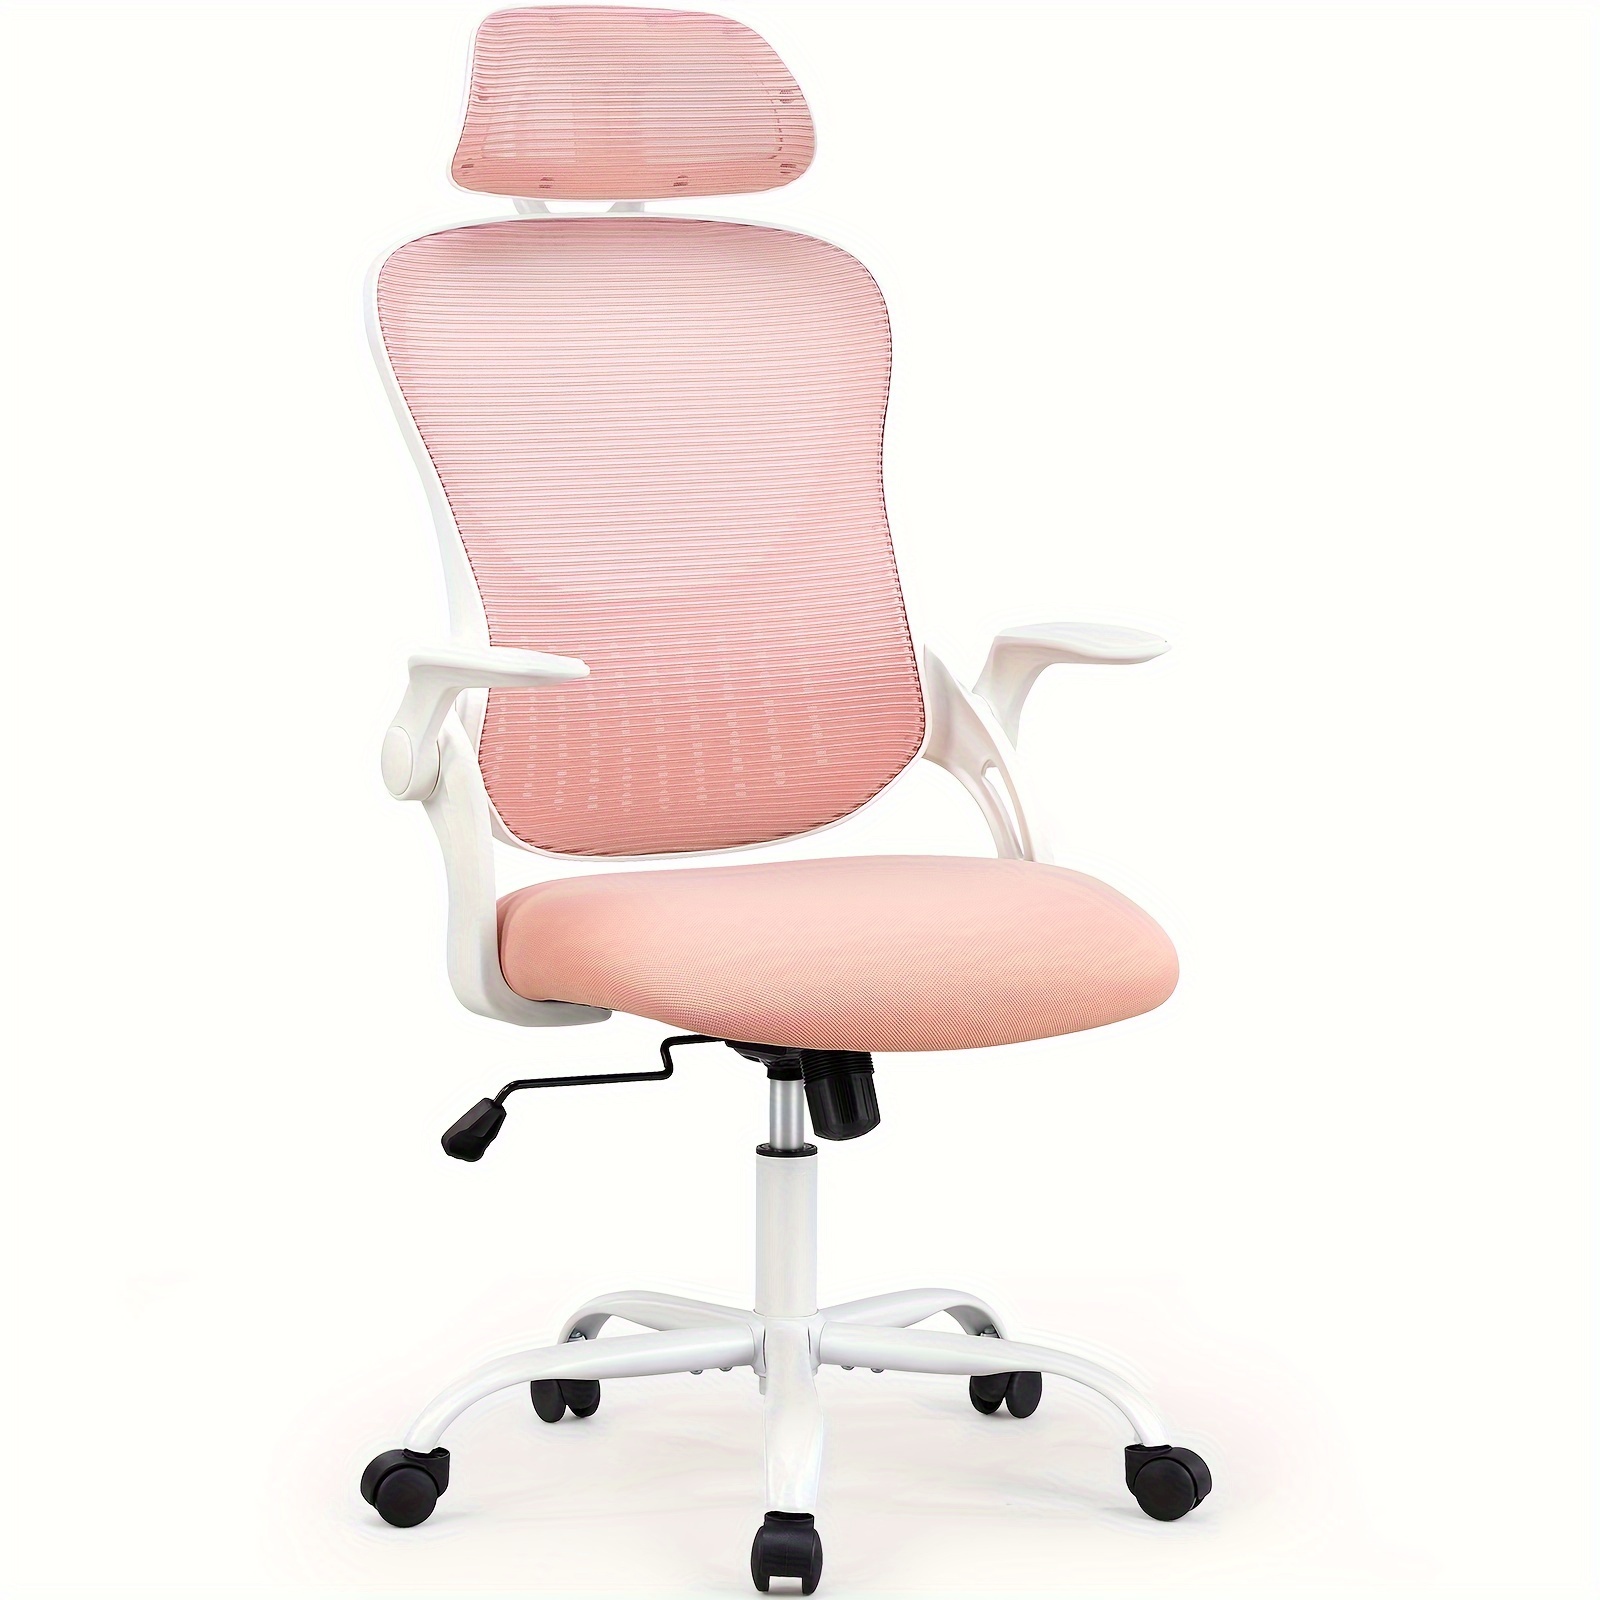 

Olixis Ergonomic Desk Computer Chair, High Back Comfort Swivel Home Gaming Mesh Chair With Wheels, Adjustable Headrest, Flip-up Armrests, 144° Tilt, Suitable For Studying